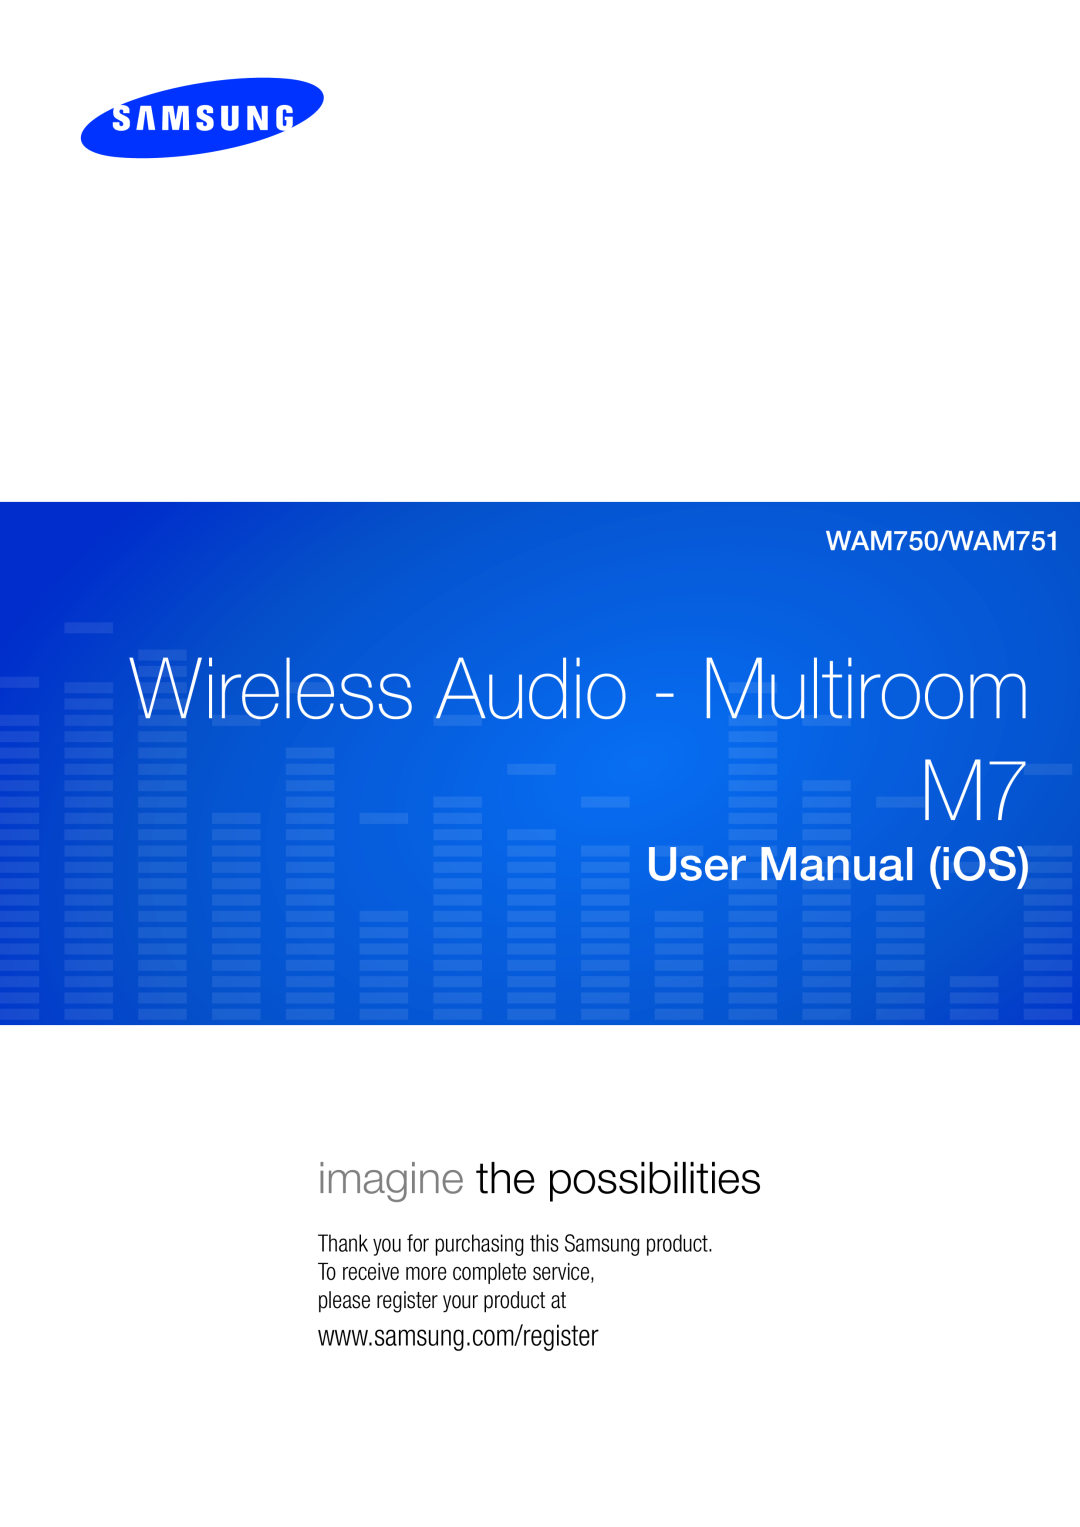 Samsung user manual Wireless Audio - Multiroom, User Manual iOS, imagine the possibilities, WAM750/WAM751 